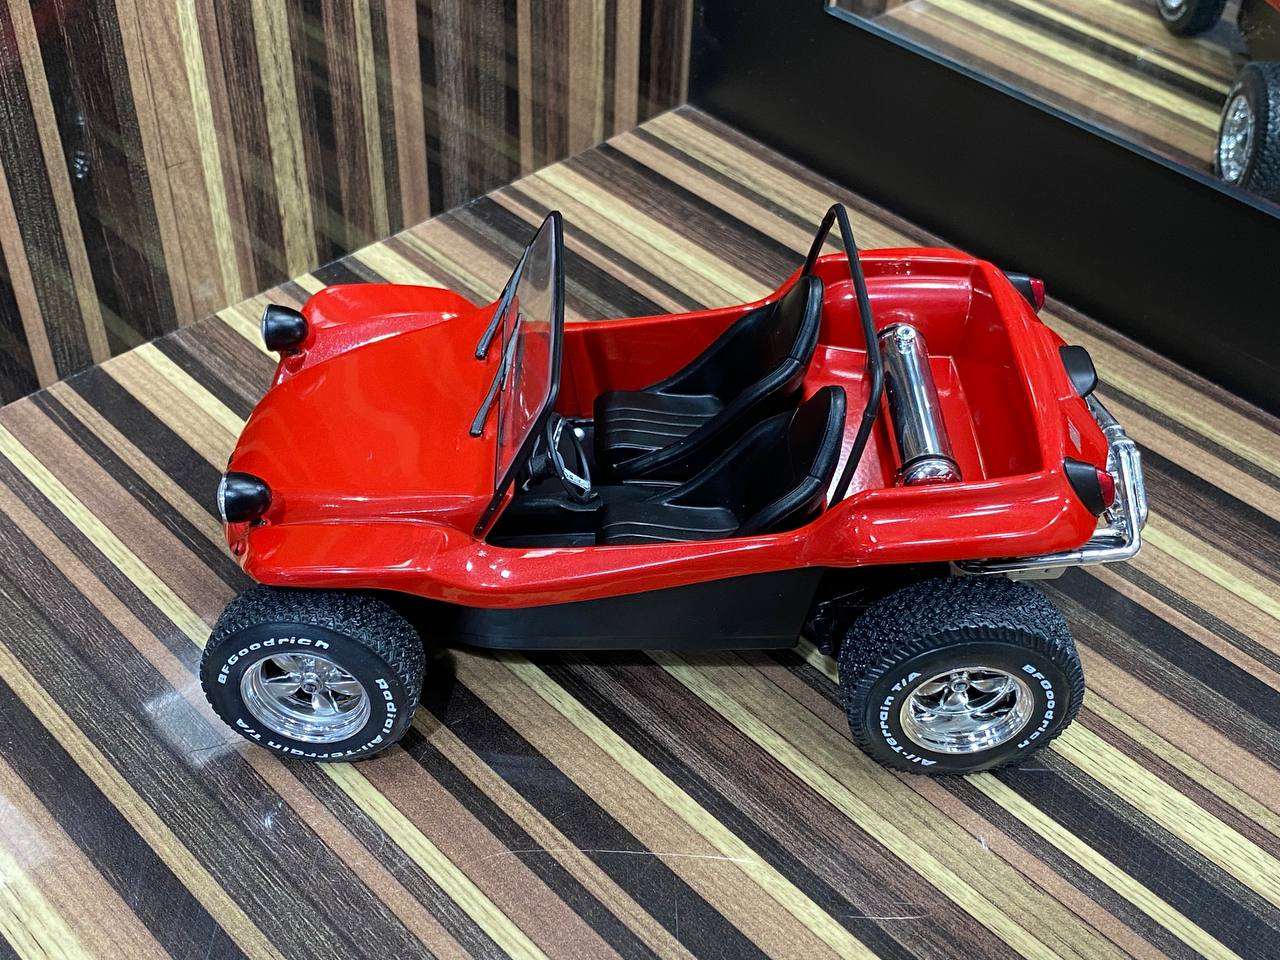 1/18 Diecast Buggy Meyer Manx Solido Miniature Model Car - Diecast model car by dturman.com - Solido|Sold in Dturman.com Dubai UAE.